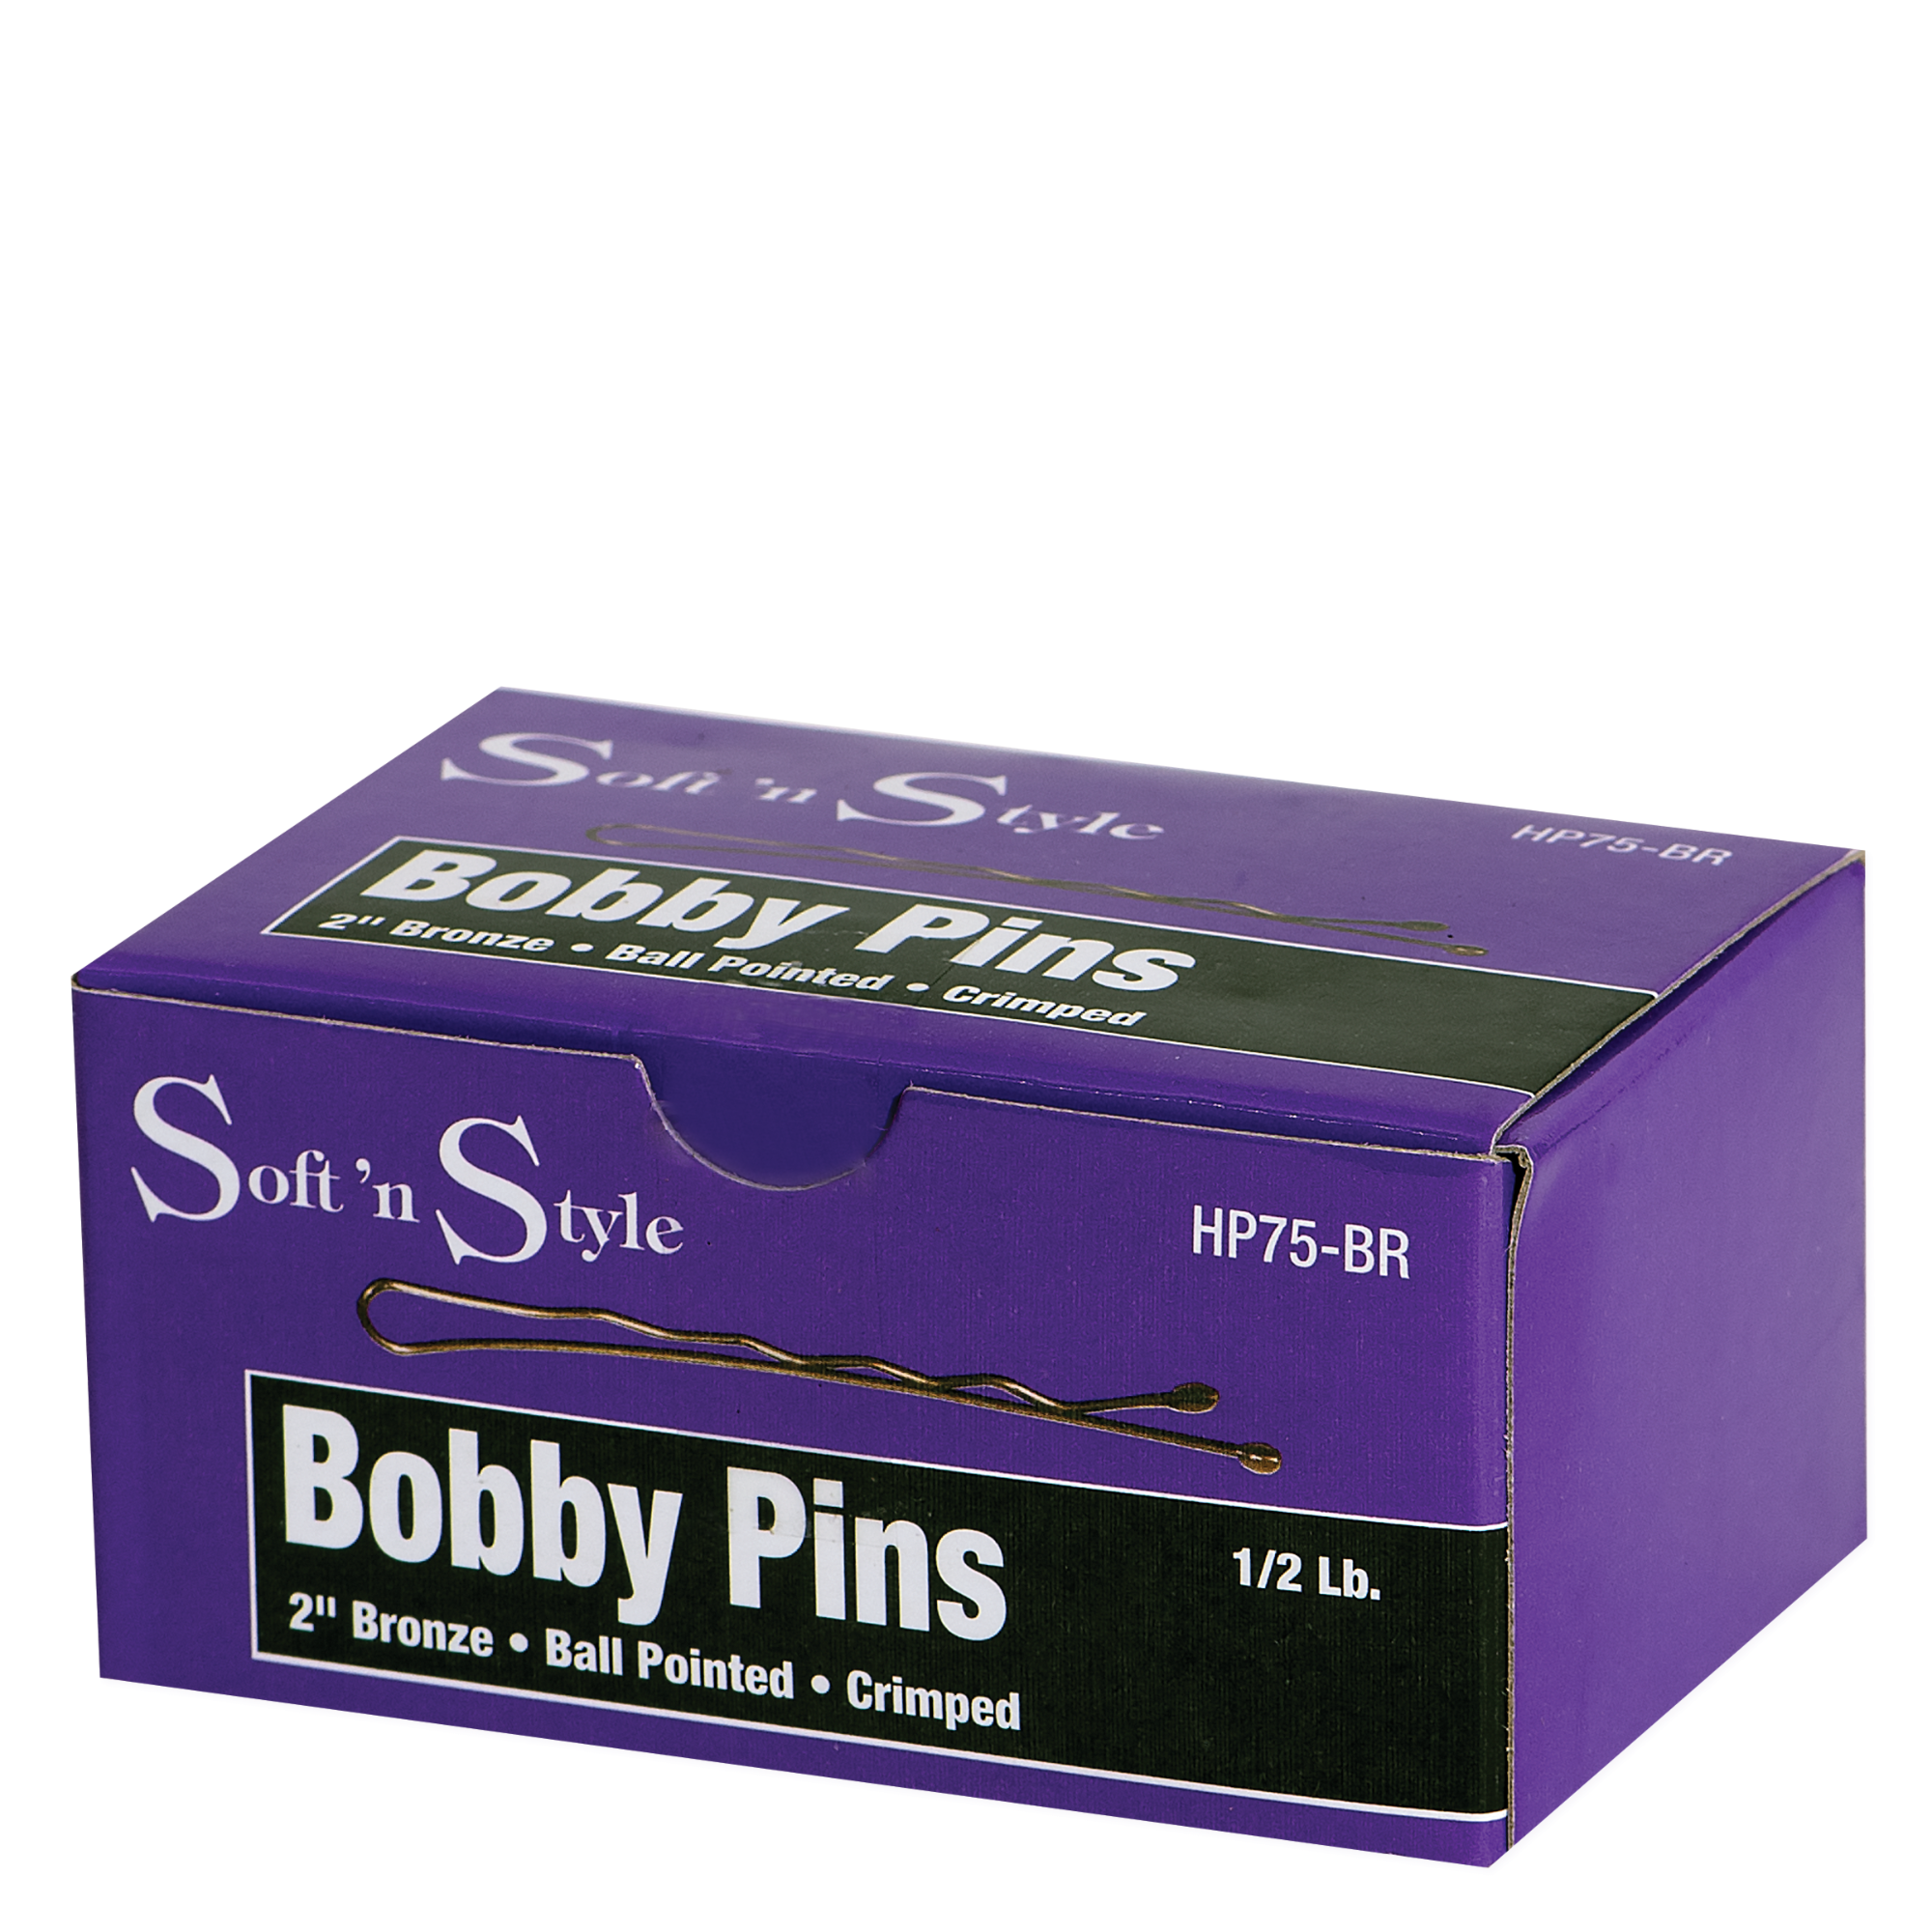 Bobby Pins, Bronze, 1/2 lb. box - 2"